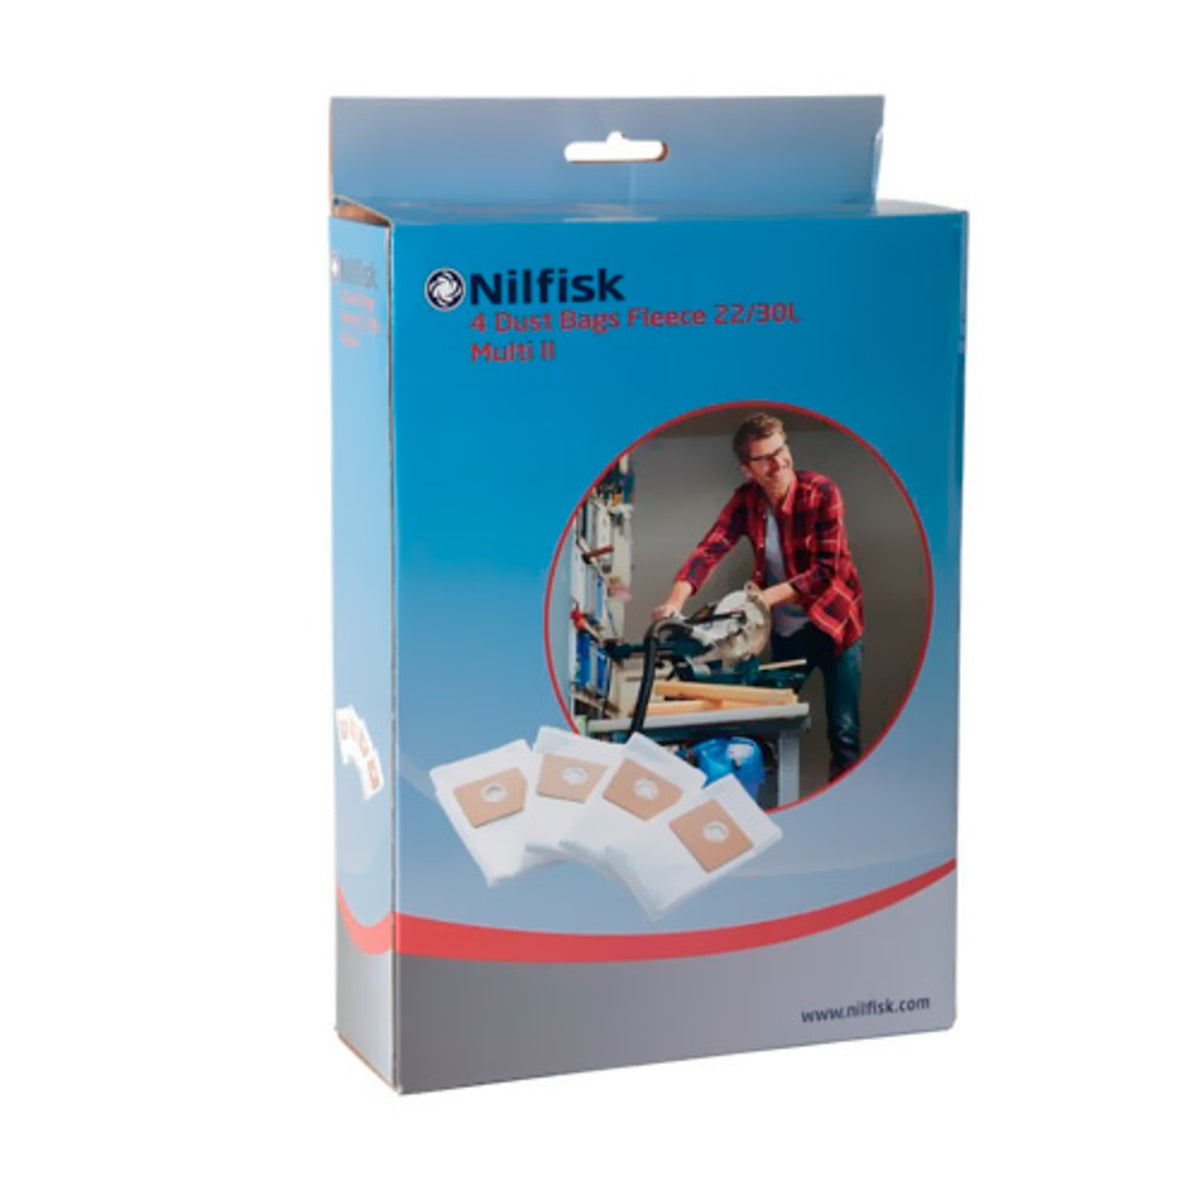 Bolsa de recambio silex para aspirador nilfisk 5715492127900 78951 NILFISK